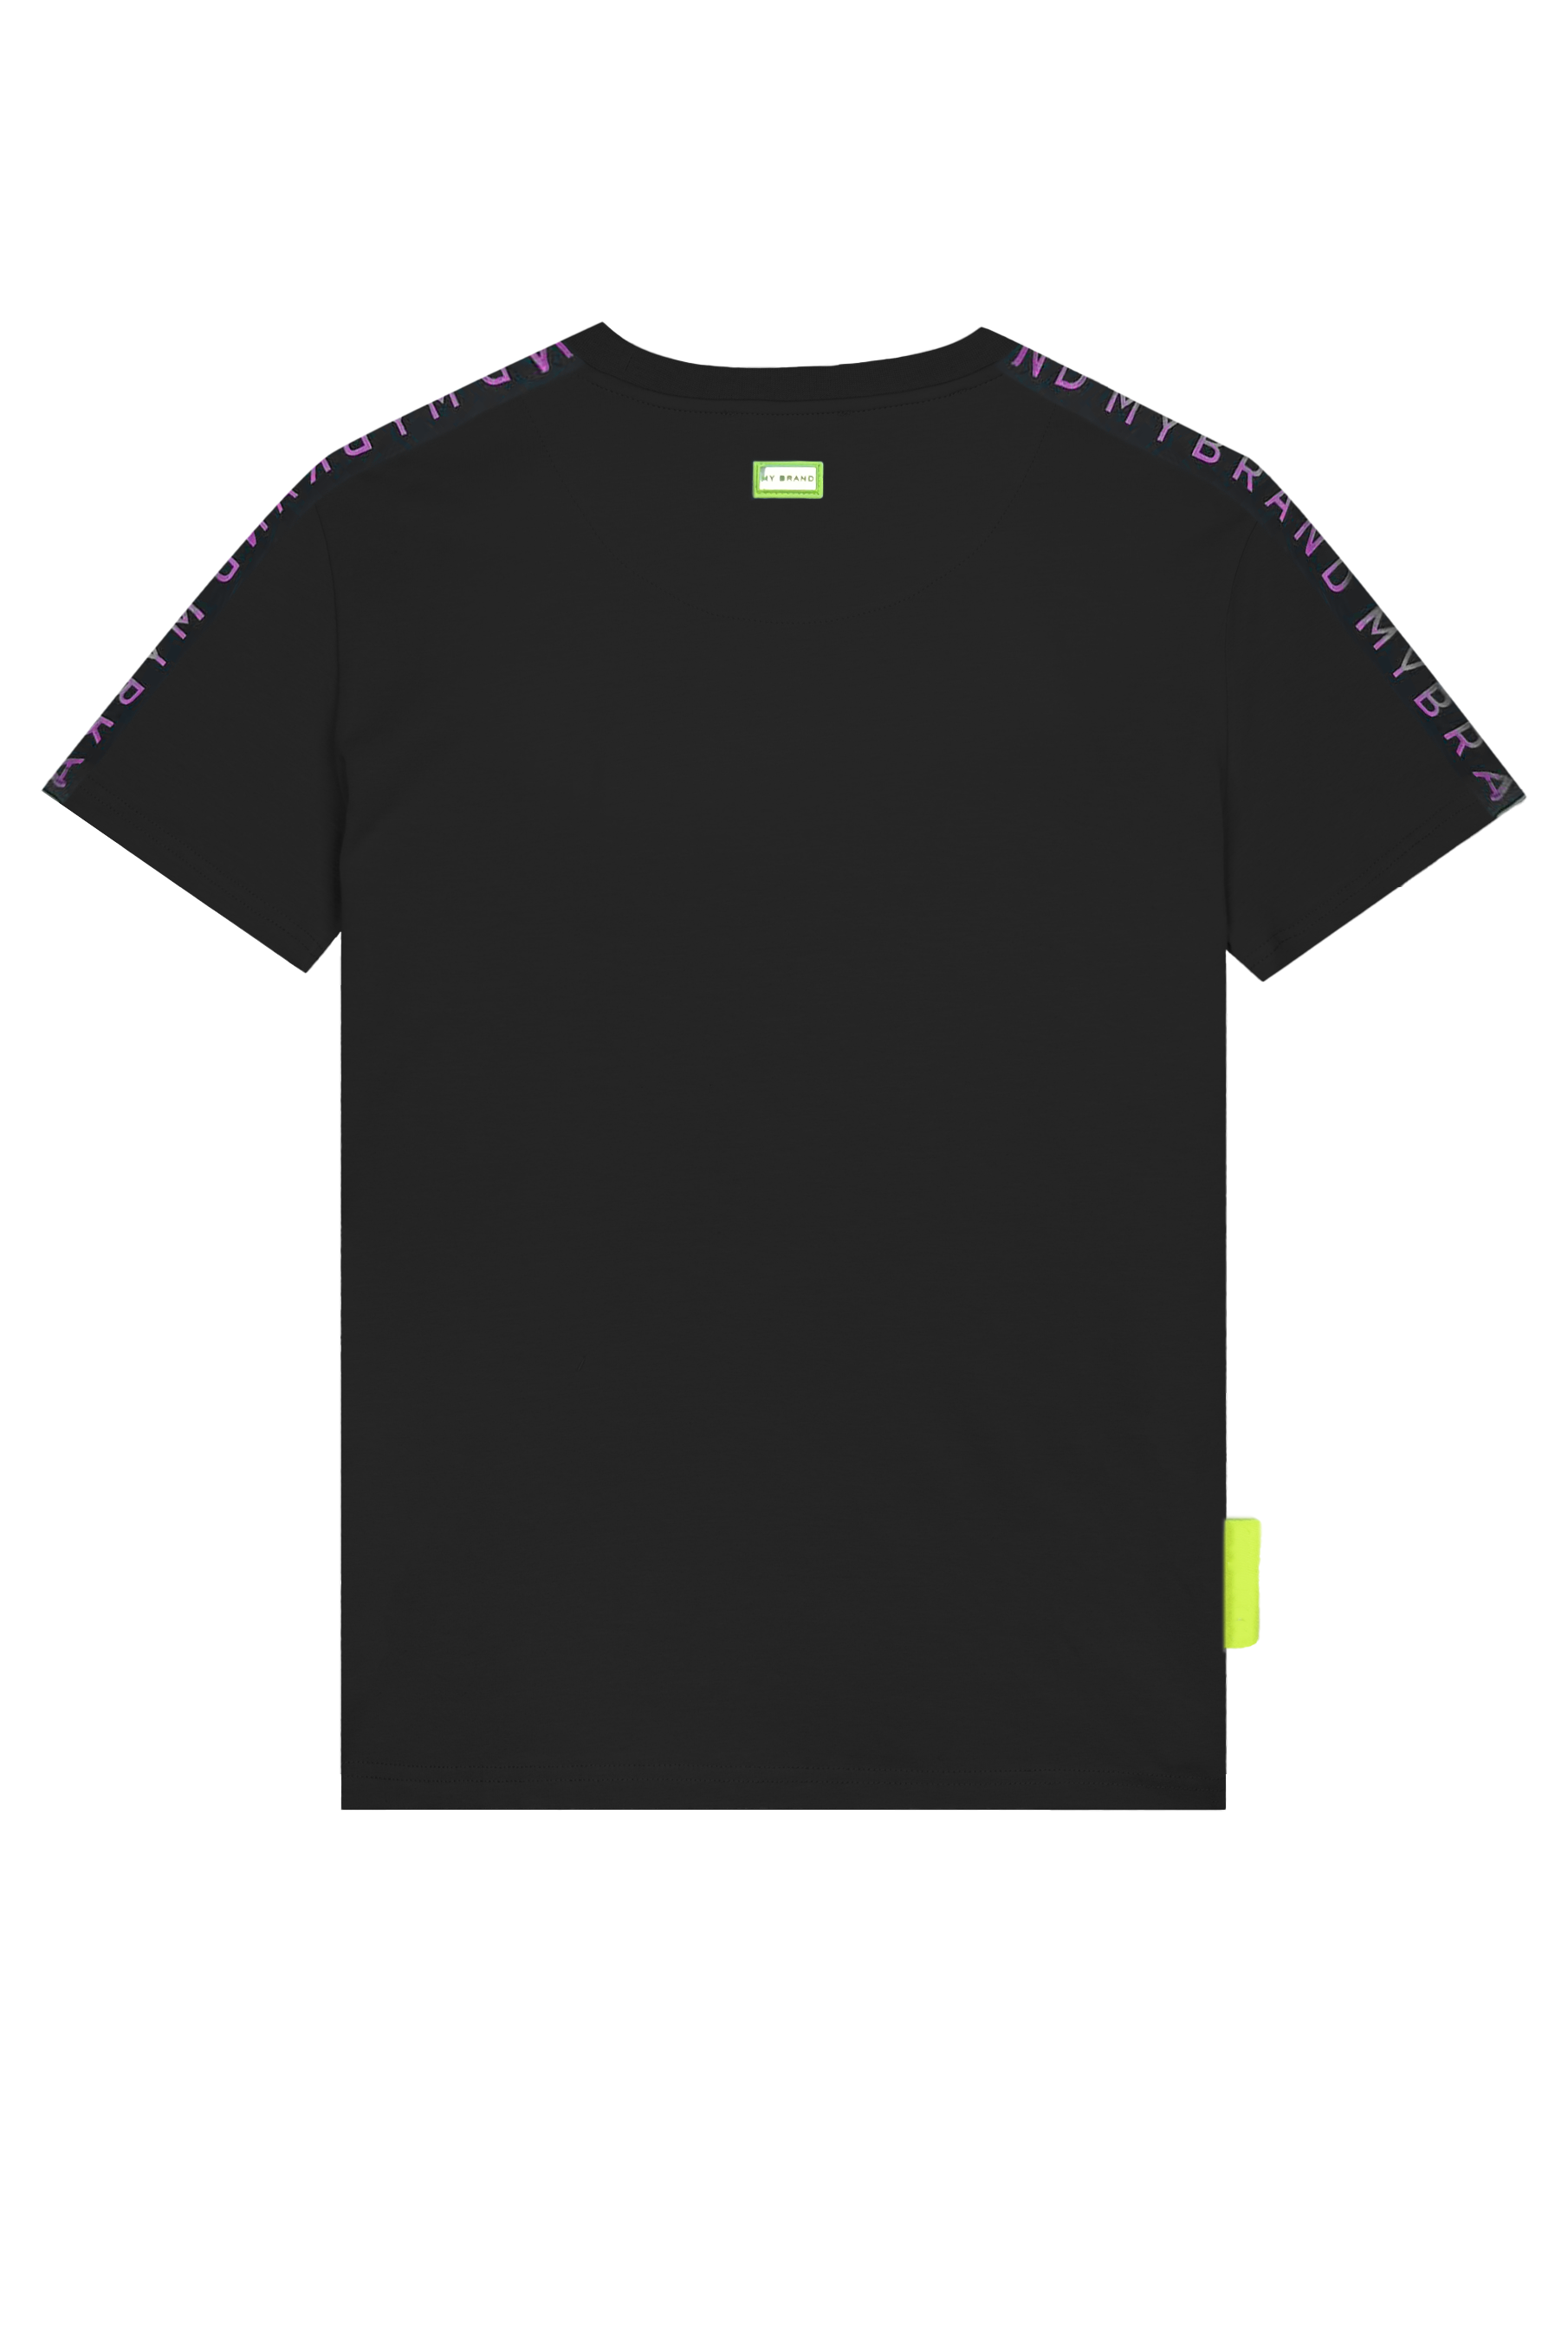 MB Gradient T-Shirt Black